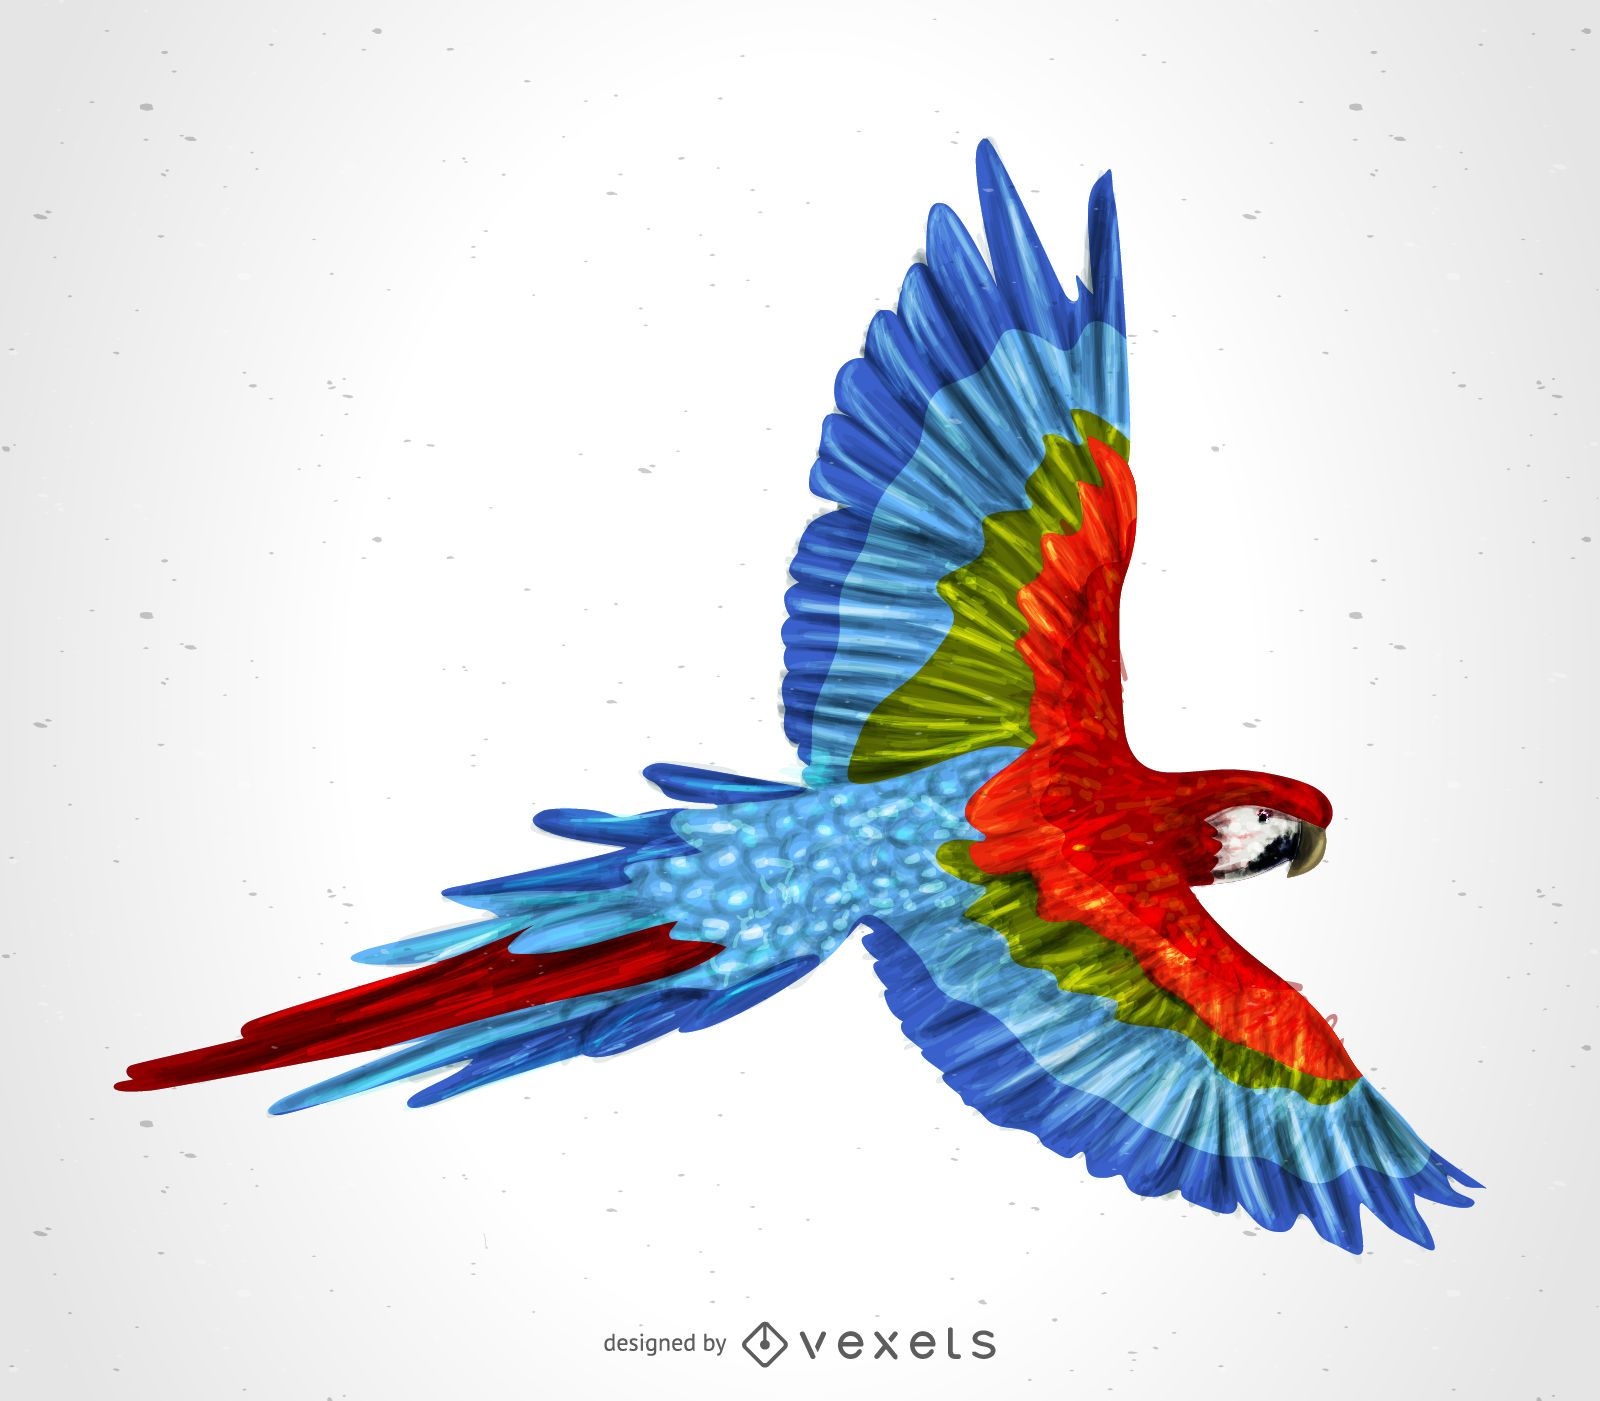 Beautiful macaw parrot illustration